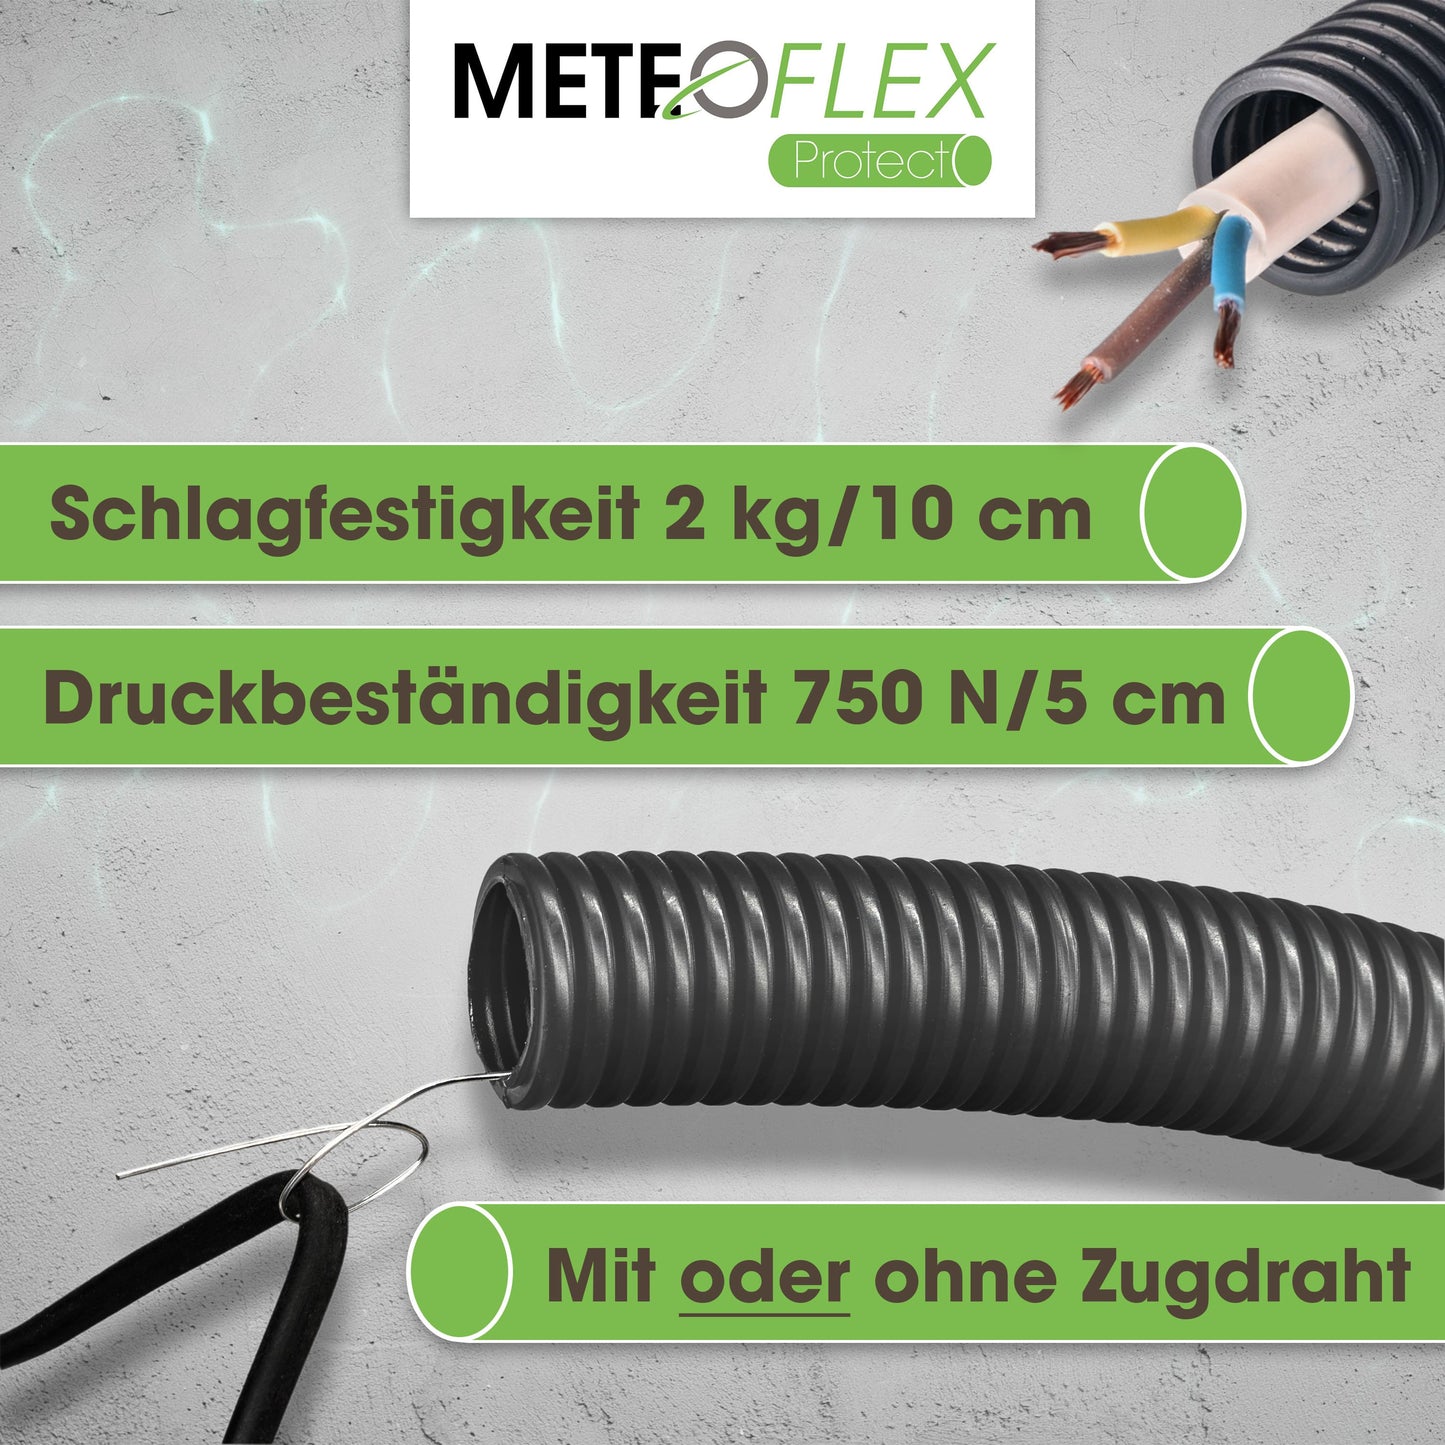 METEOFLEX® PROTECT LEERROHR 750N M16 M20 M25 M32 M40 M50